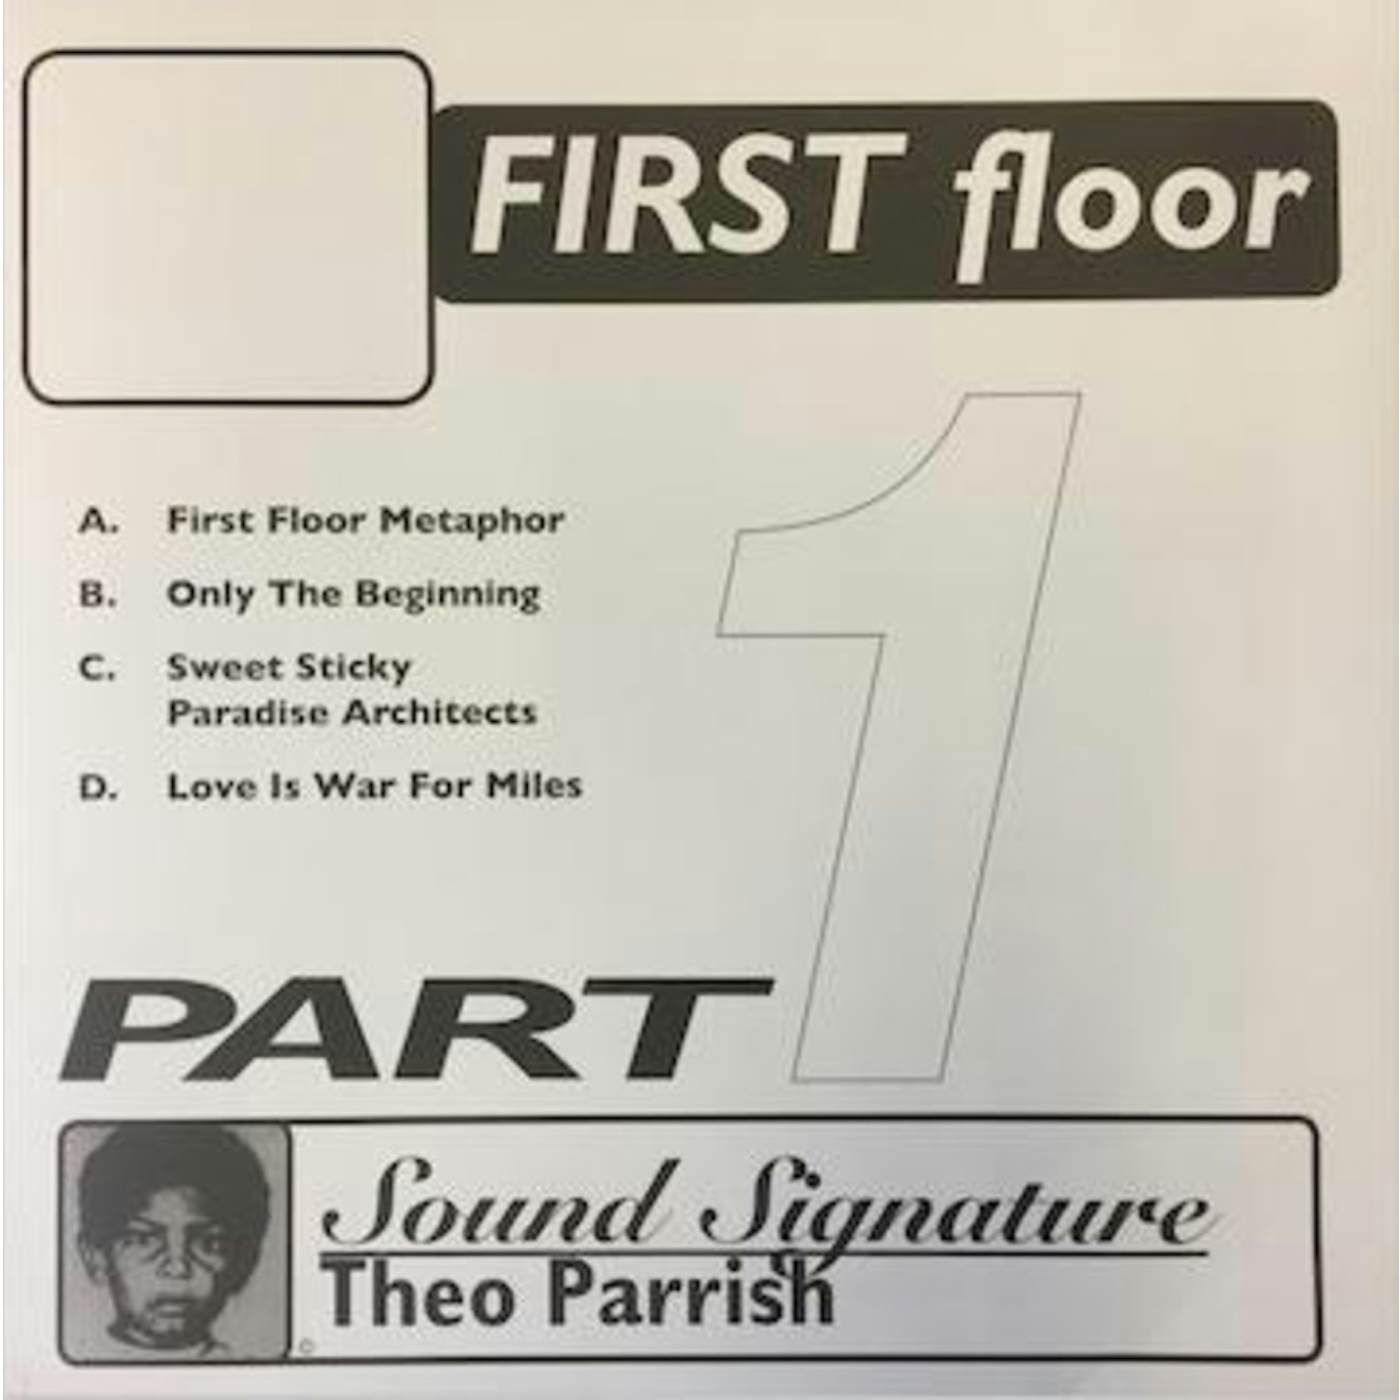 Theo Parrish FIRST FLOOR PT 1 Vinyl Record